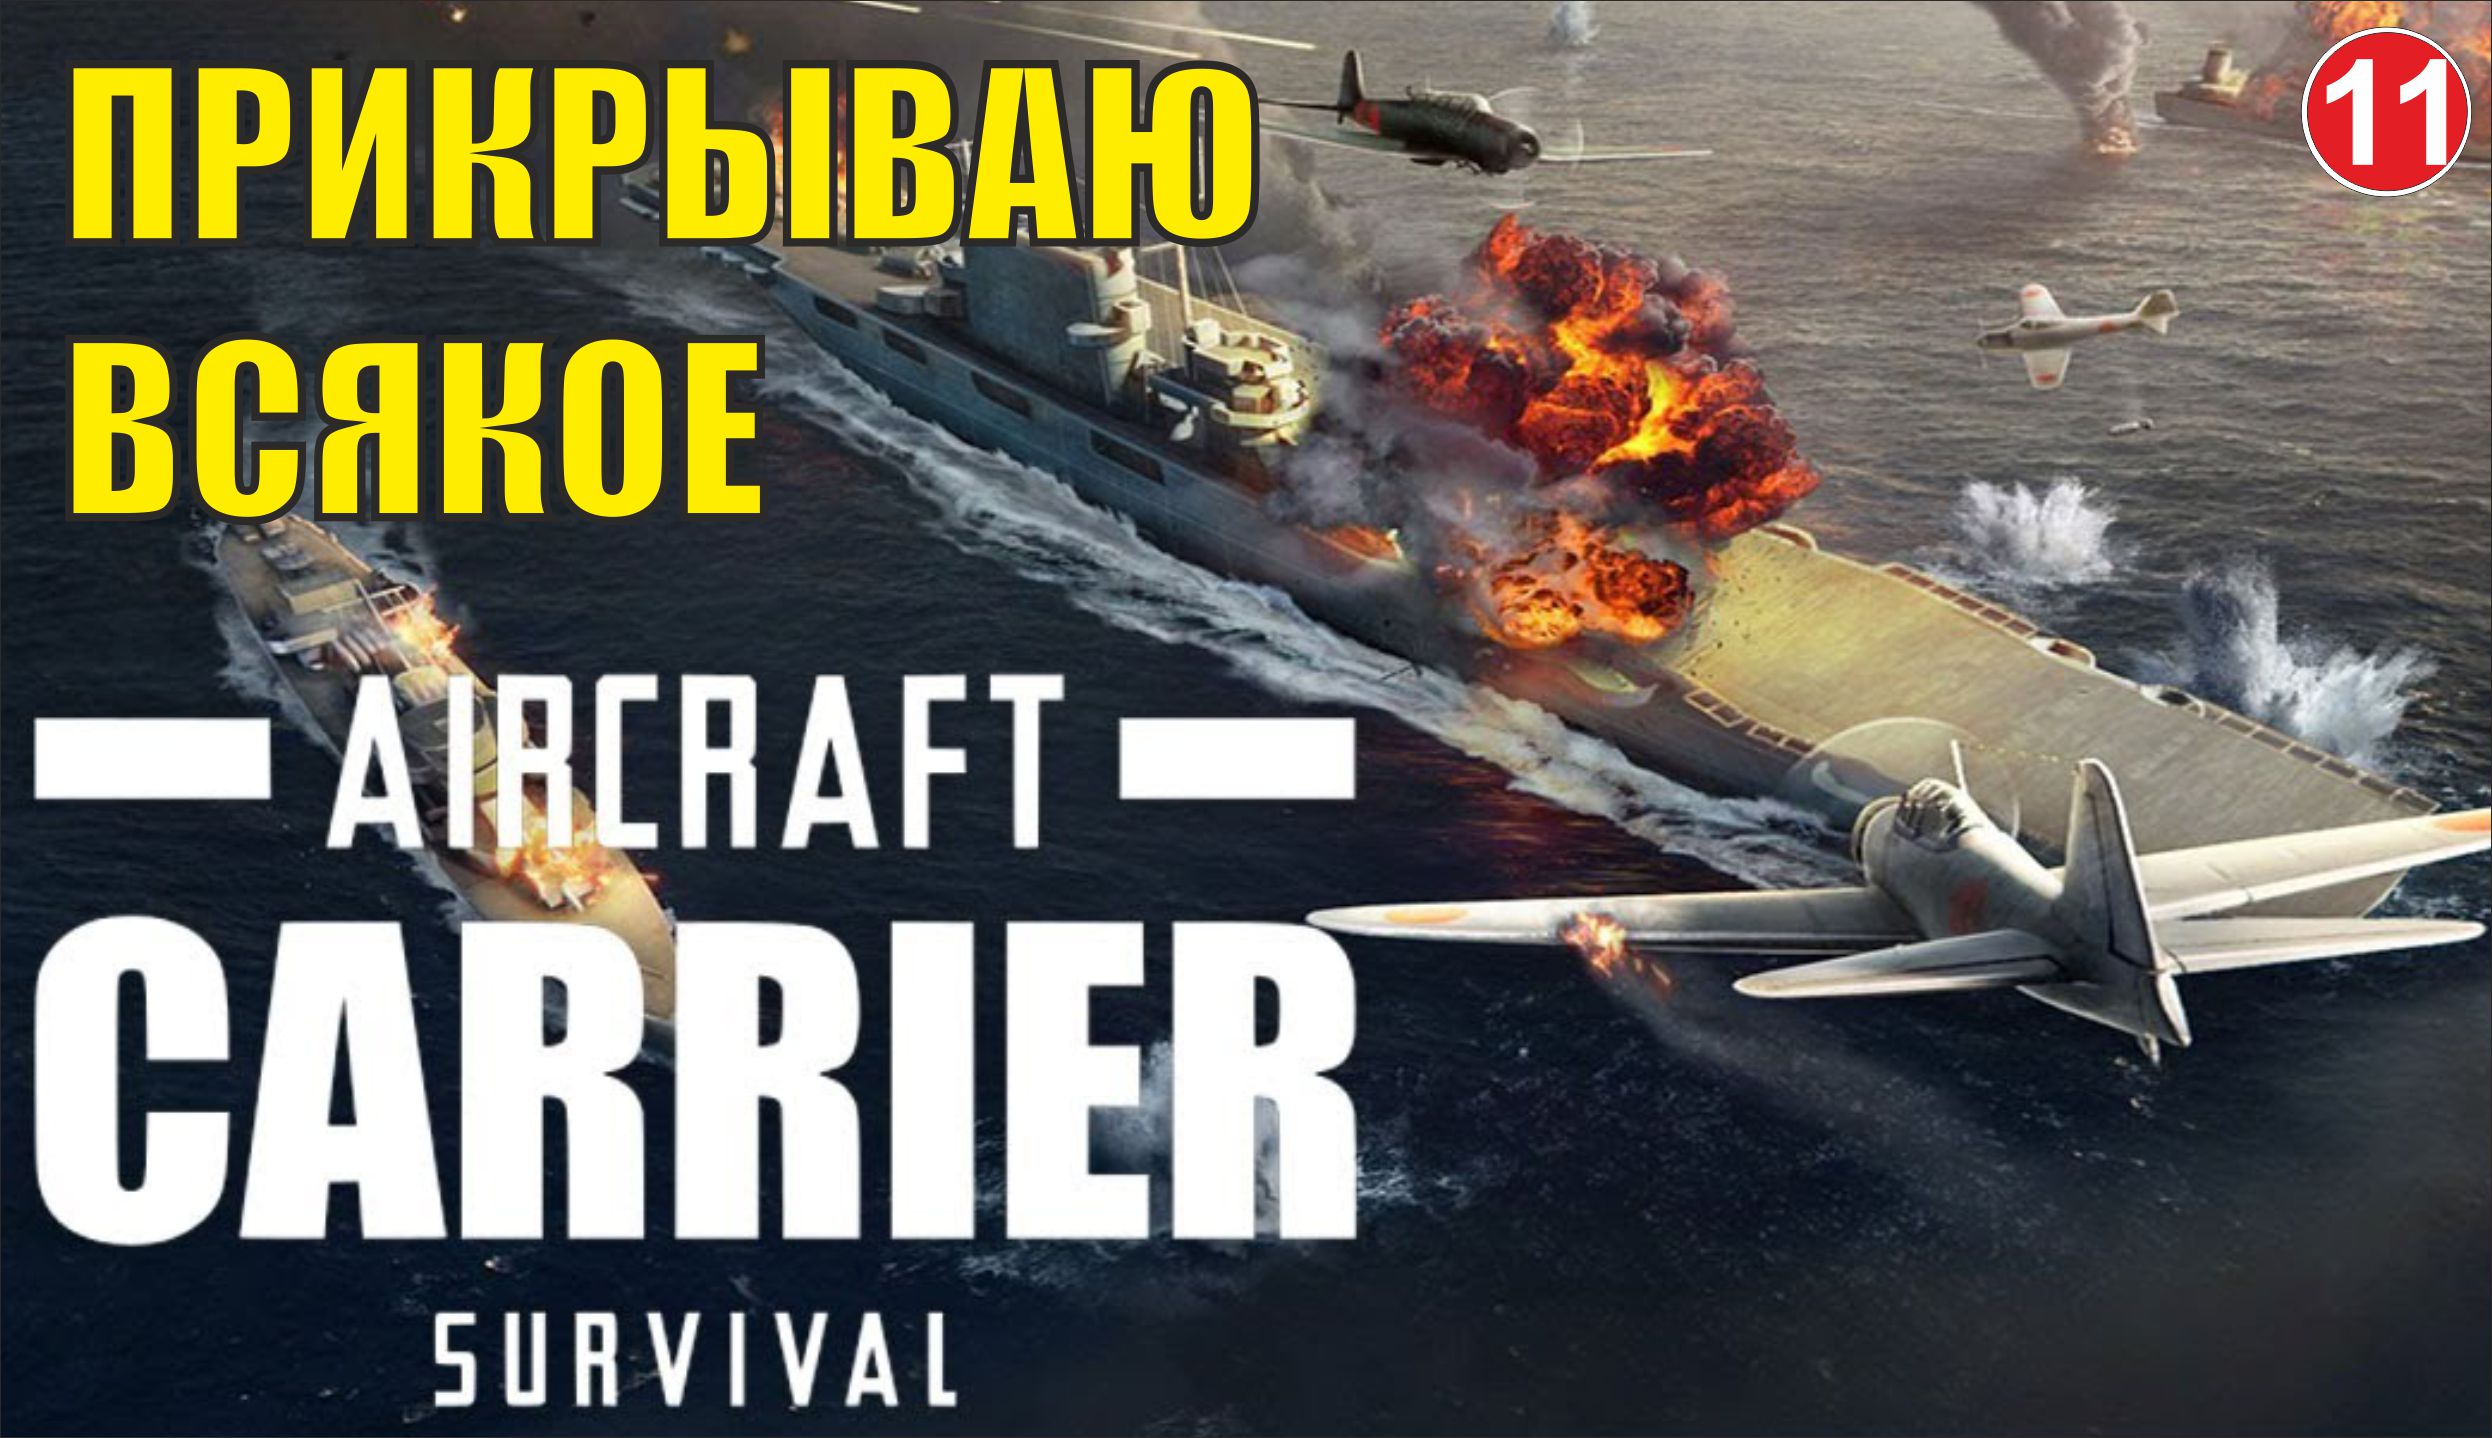 Aircraft Carrier Survival - Прикрываю всякое